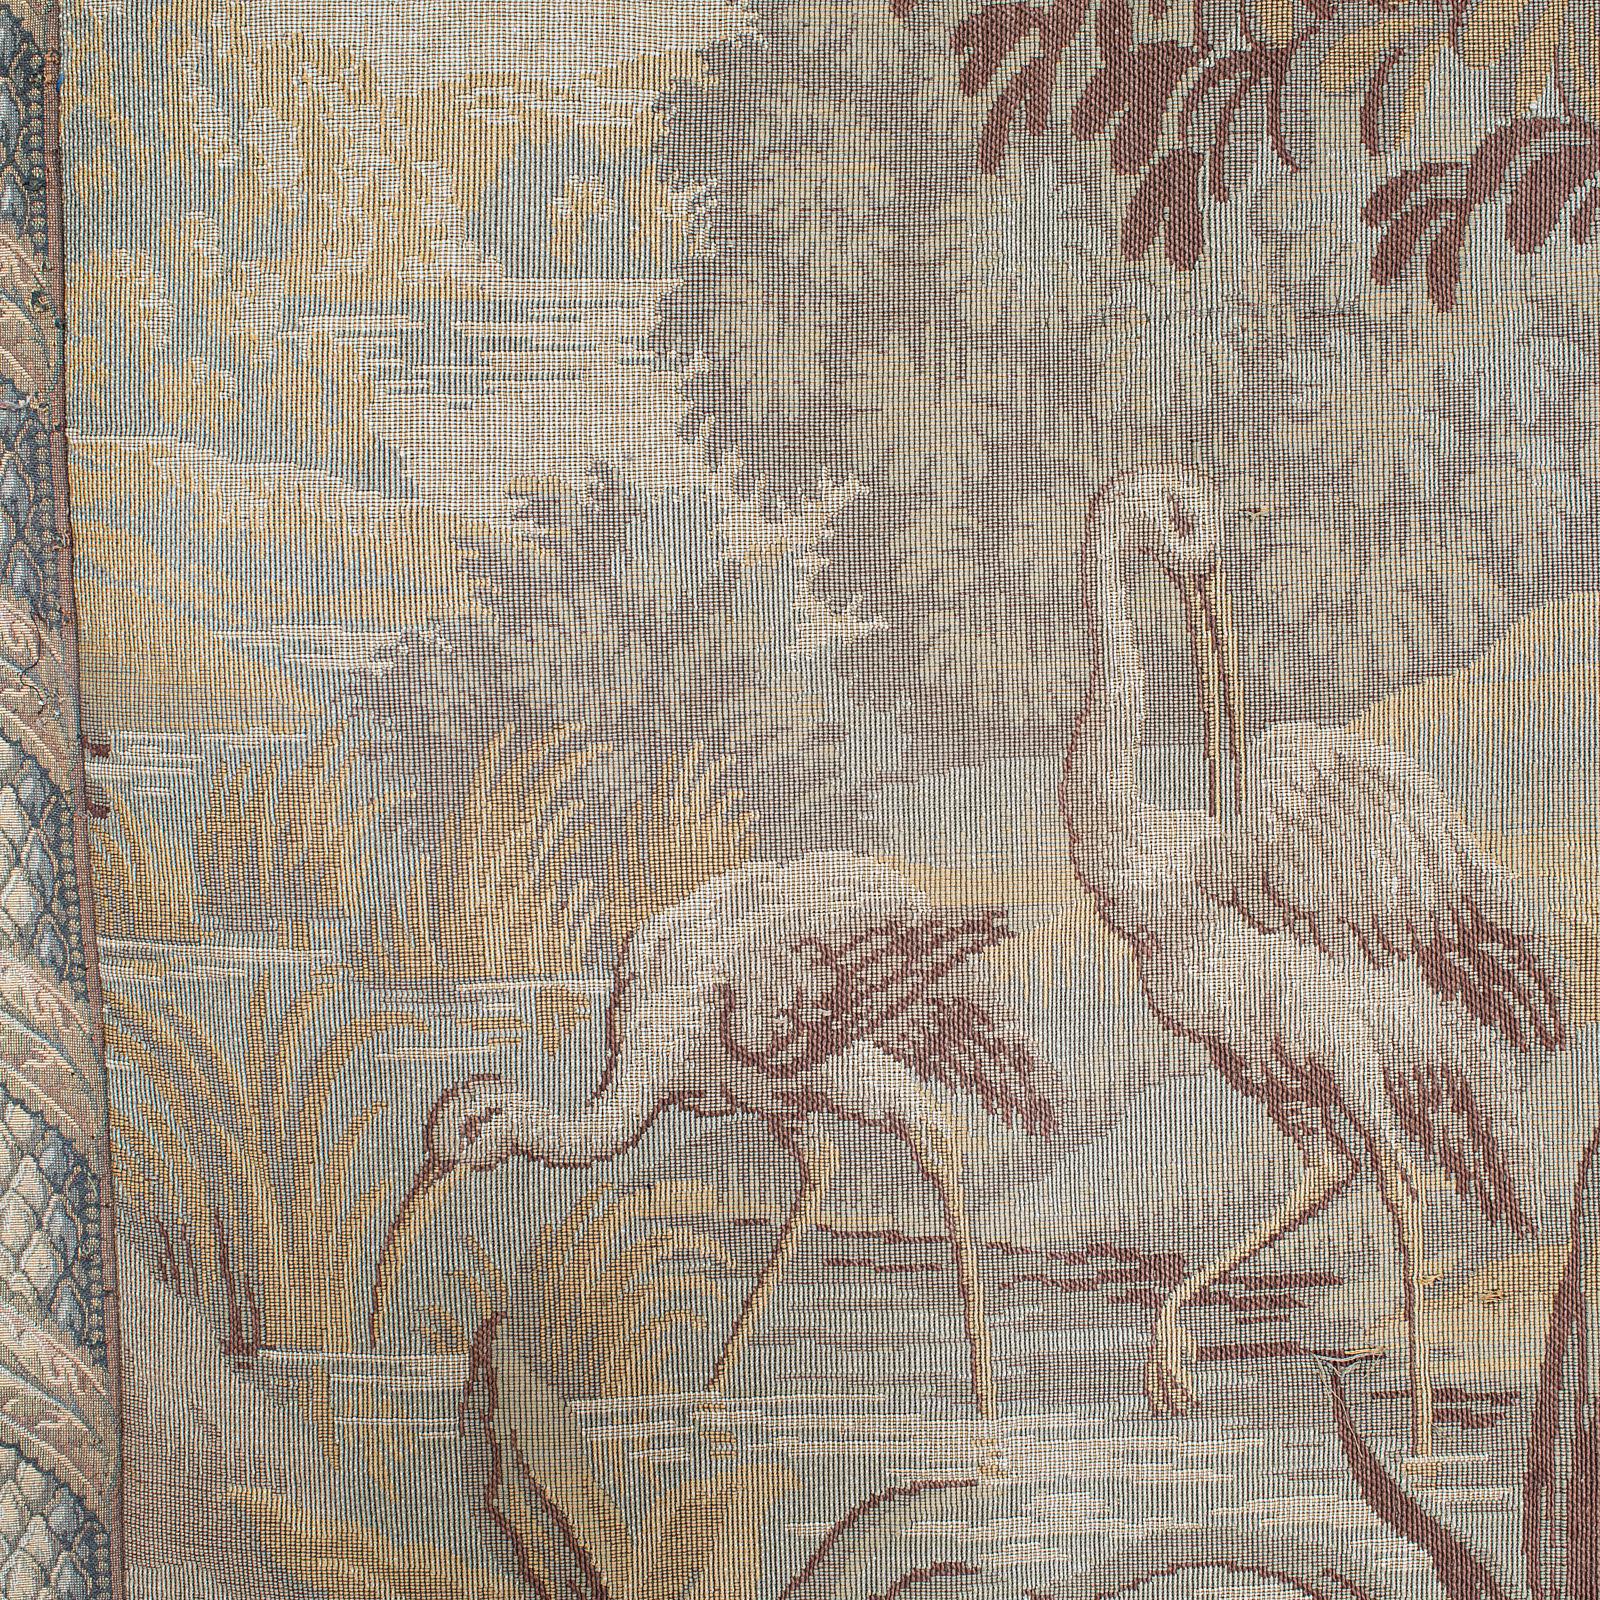 19th Century vAntique Verdure Tapestry, Continental, Textile, Wall, Decorative, Victorian